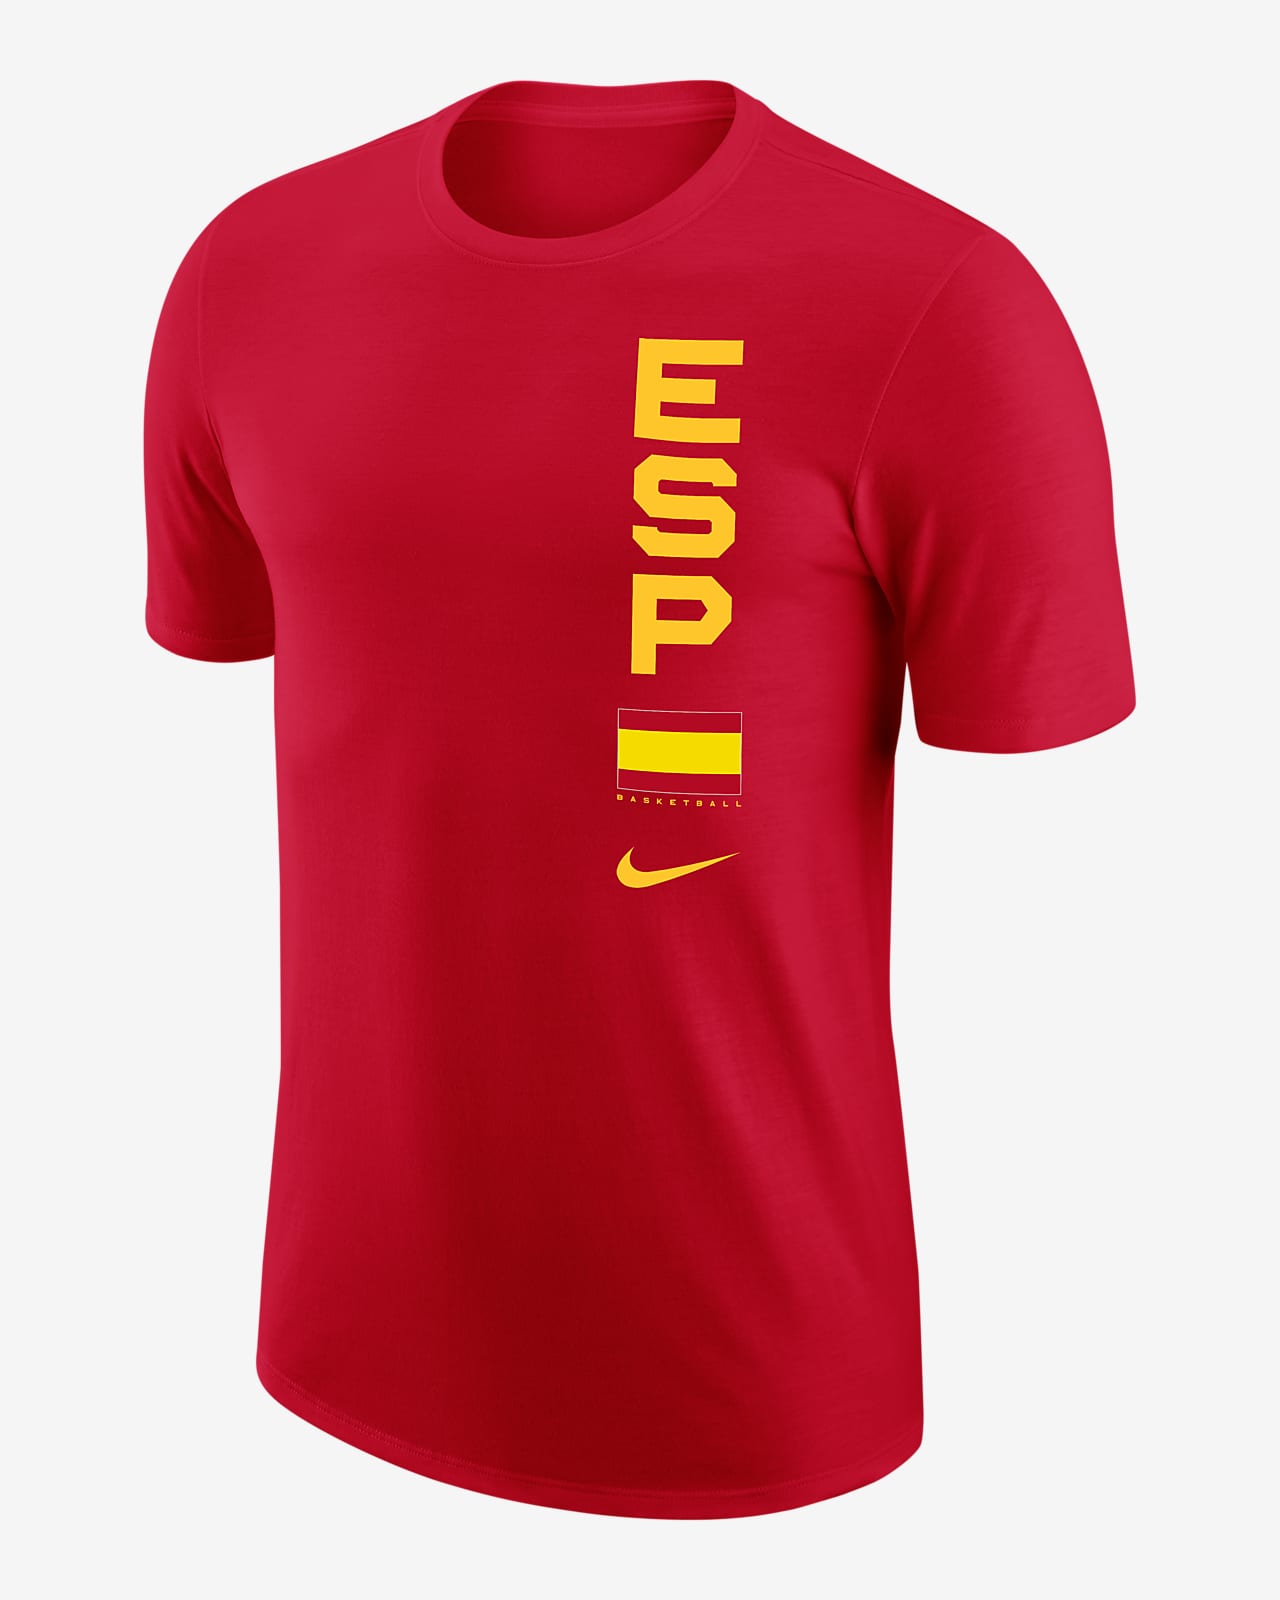 Spain Nike Men's Team Basketball T-Shirt. JP